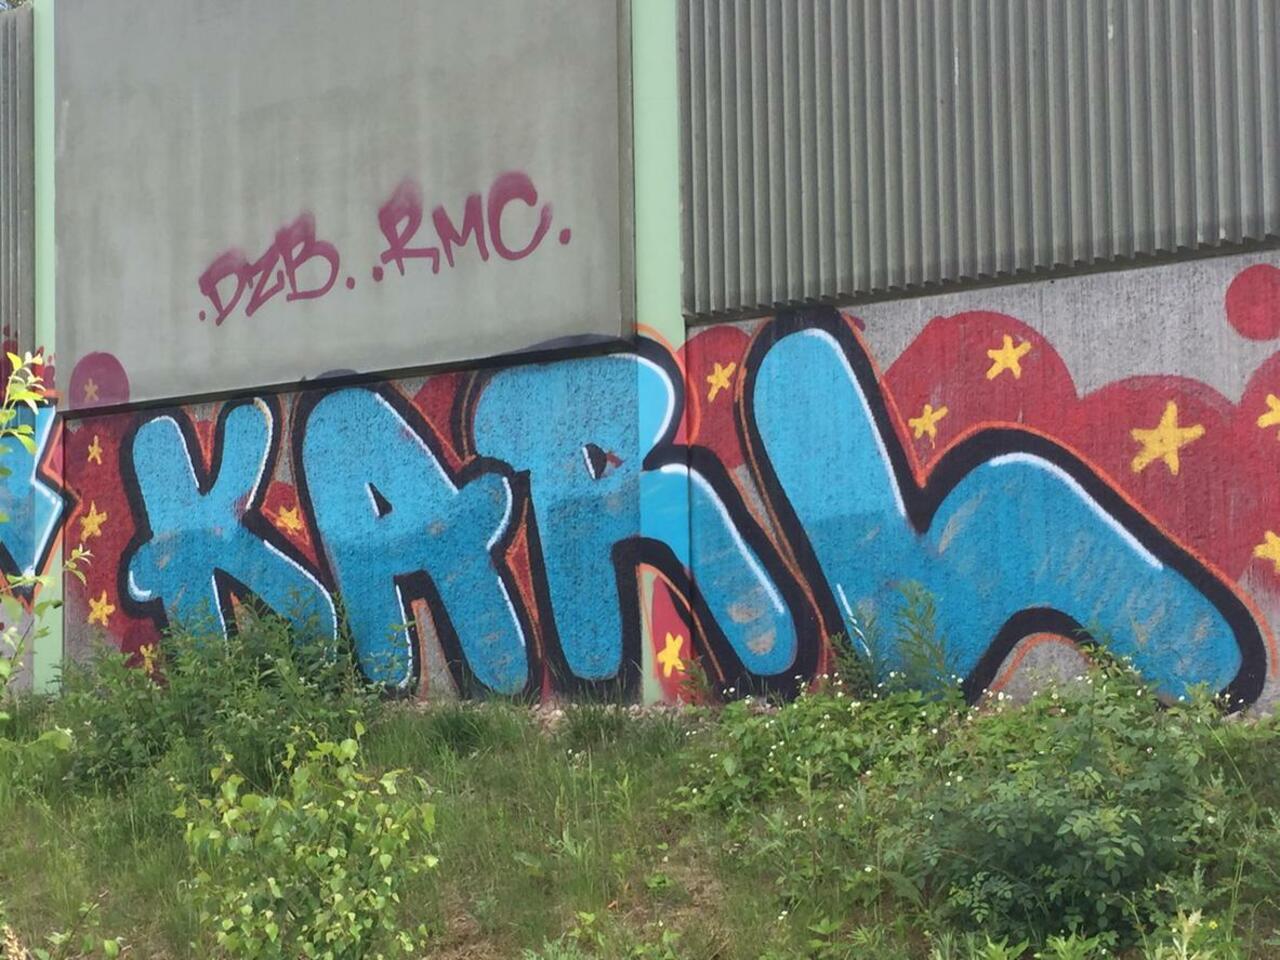 ...in Niedernhausen// Karl //#streetart #graffiti https://t.co/VmRyP1fh6k